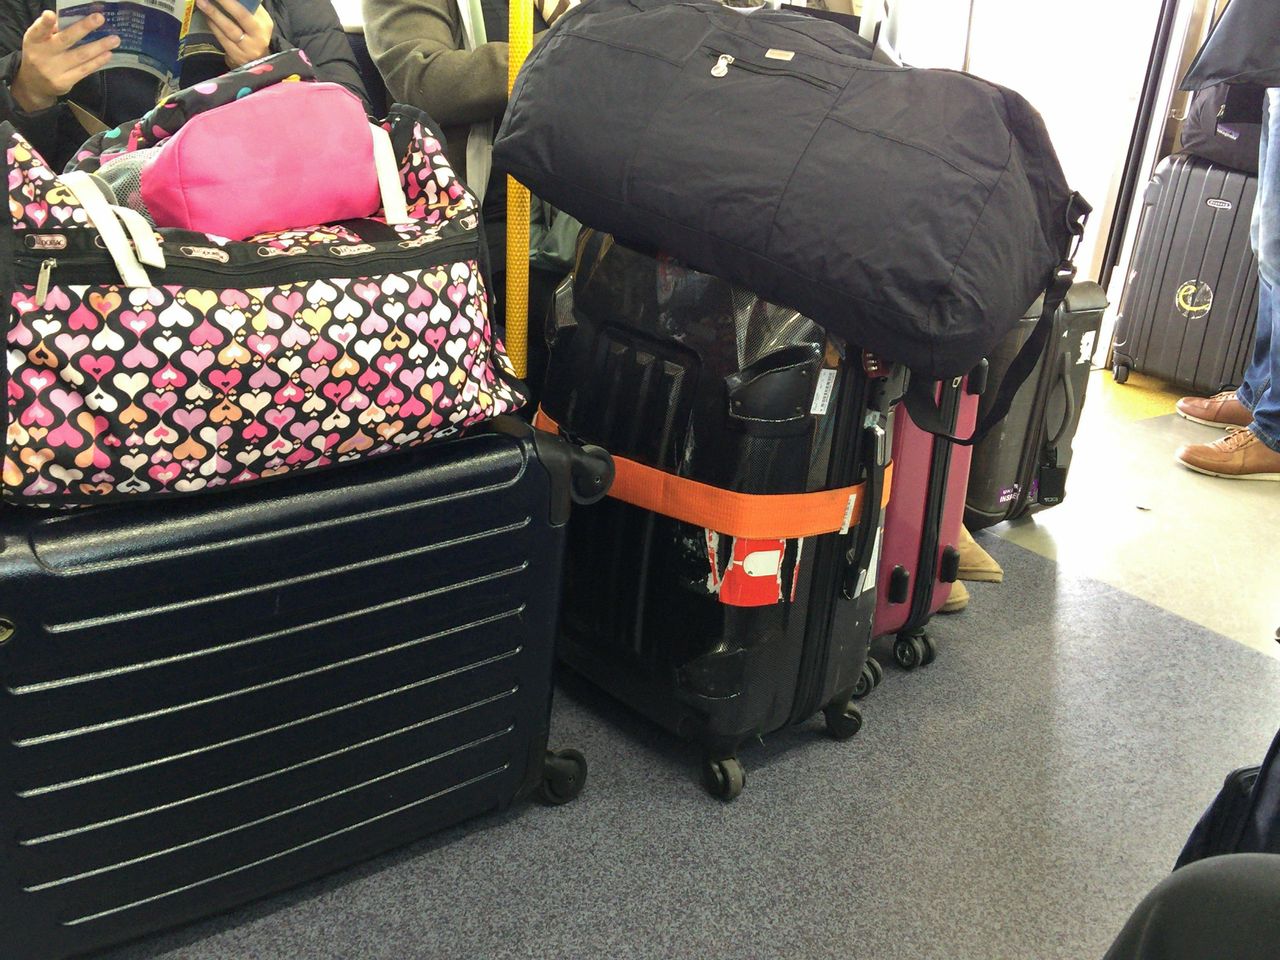 Dennis 50 16 11 21 月 曇り 空港に接続する列車にはスーツケース置き場を作ってほしい